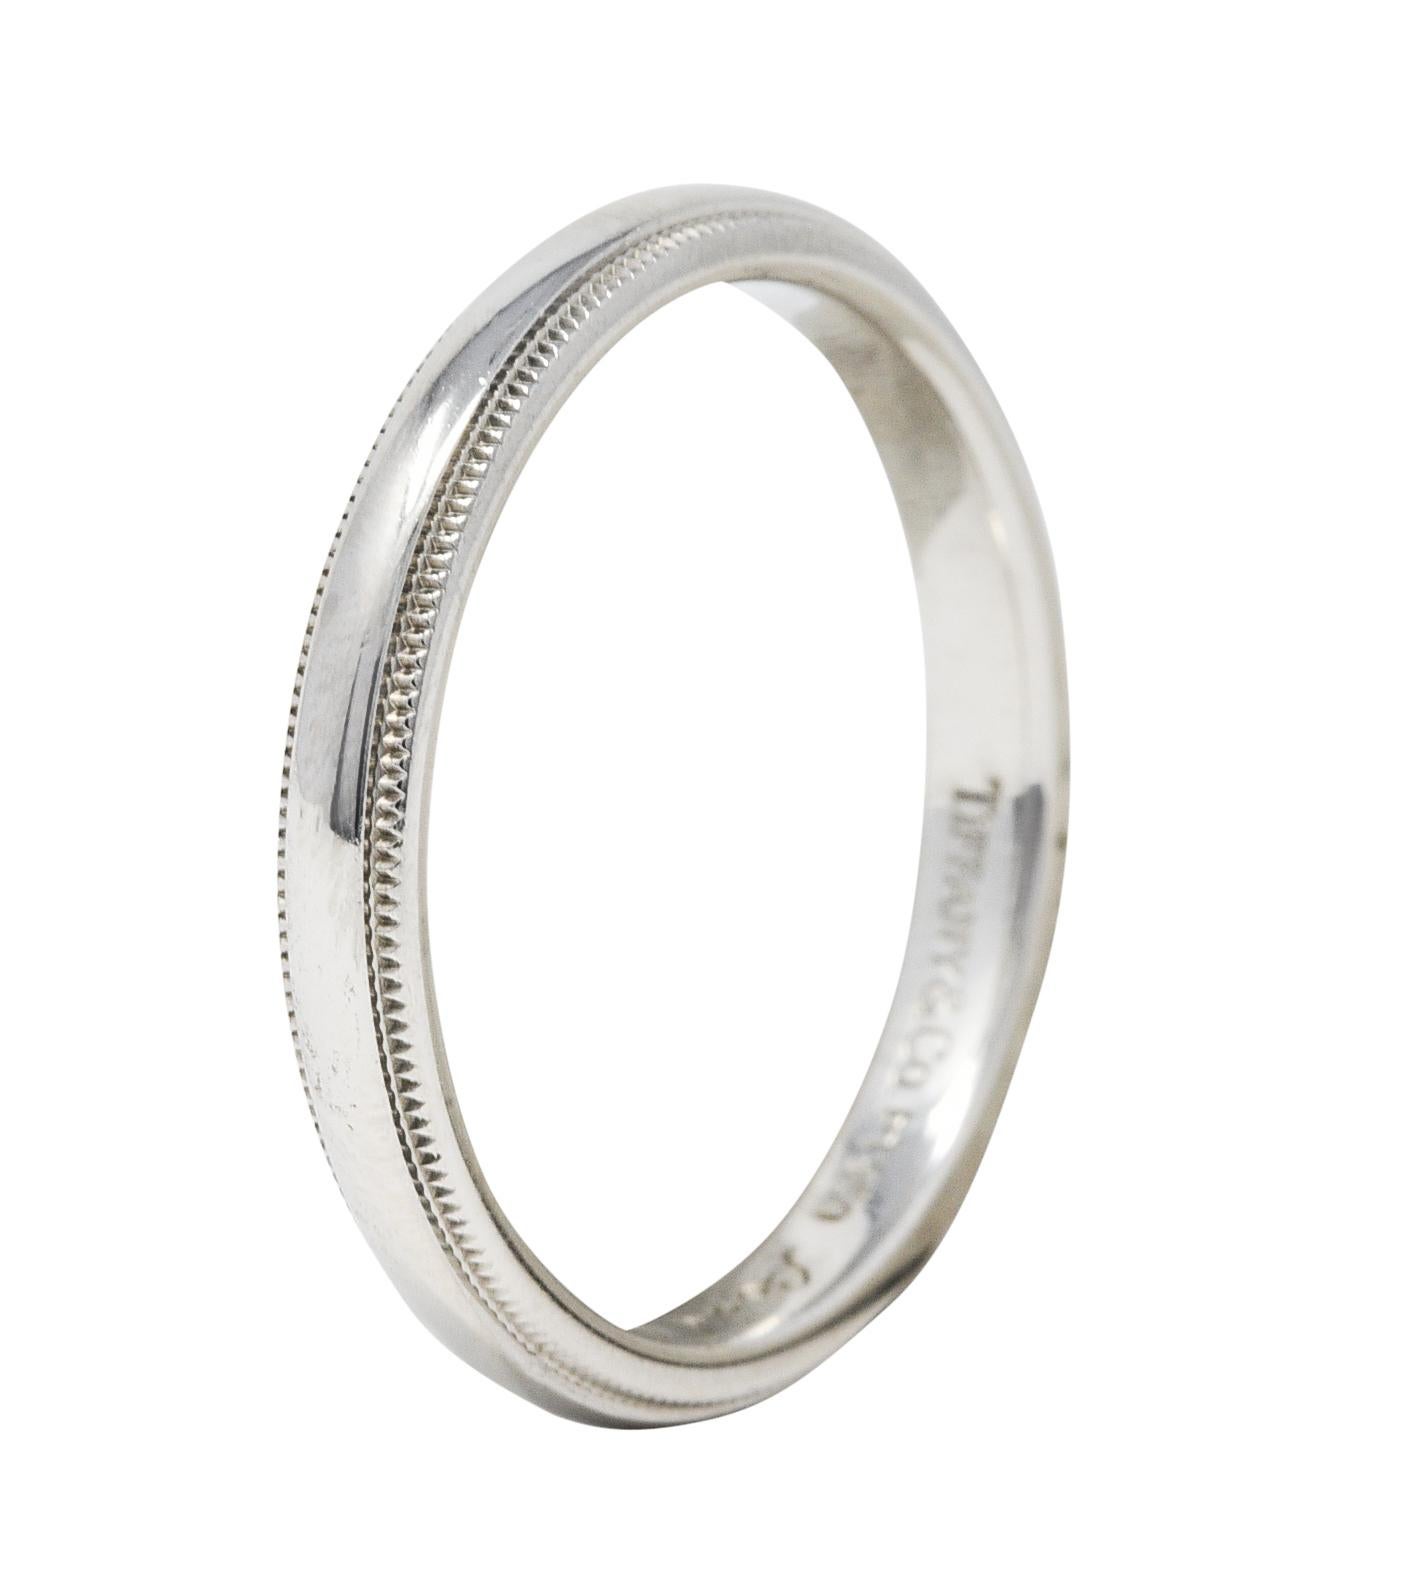 Tiffany & Co. Platinum Men's Wedding Band Ring 3